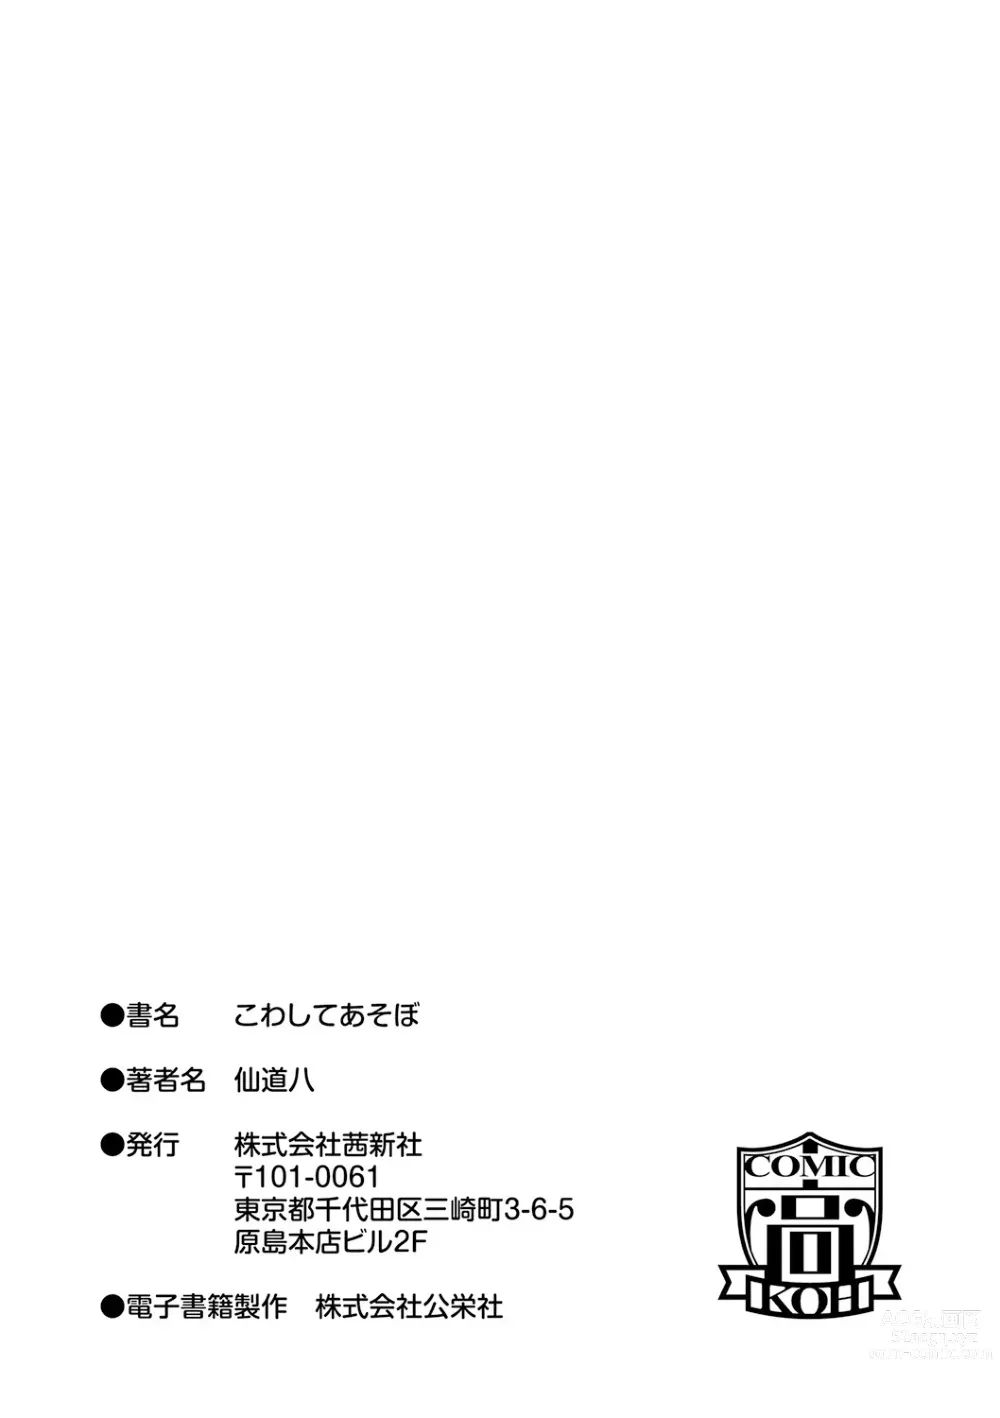 Page 201 of manga Kowashite Asobo + DLsite Gentei Chara Settei & Plot